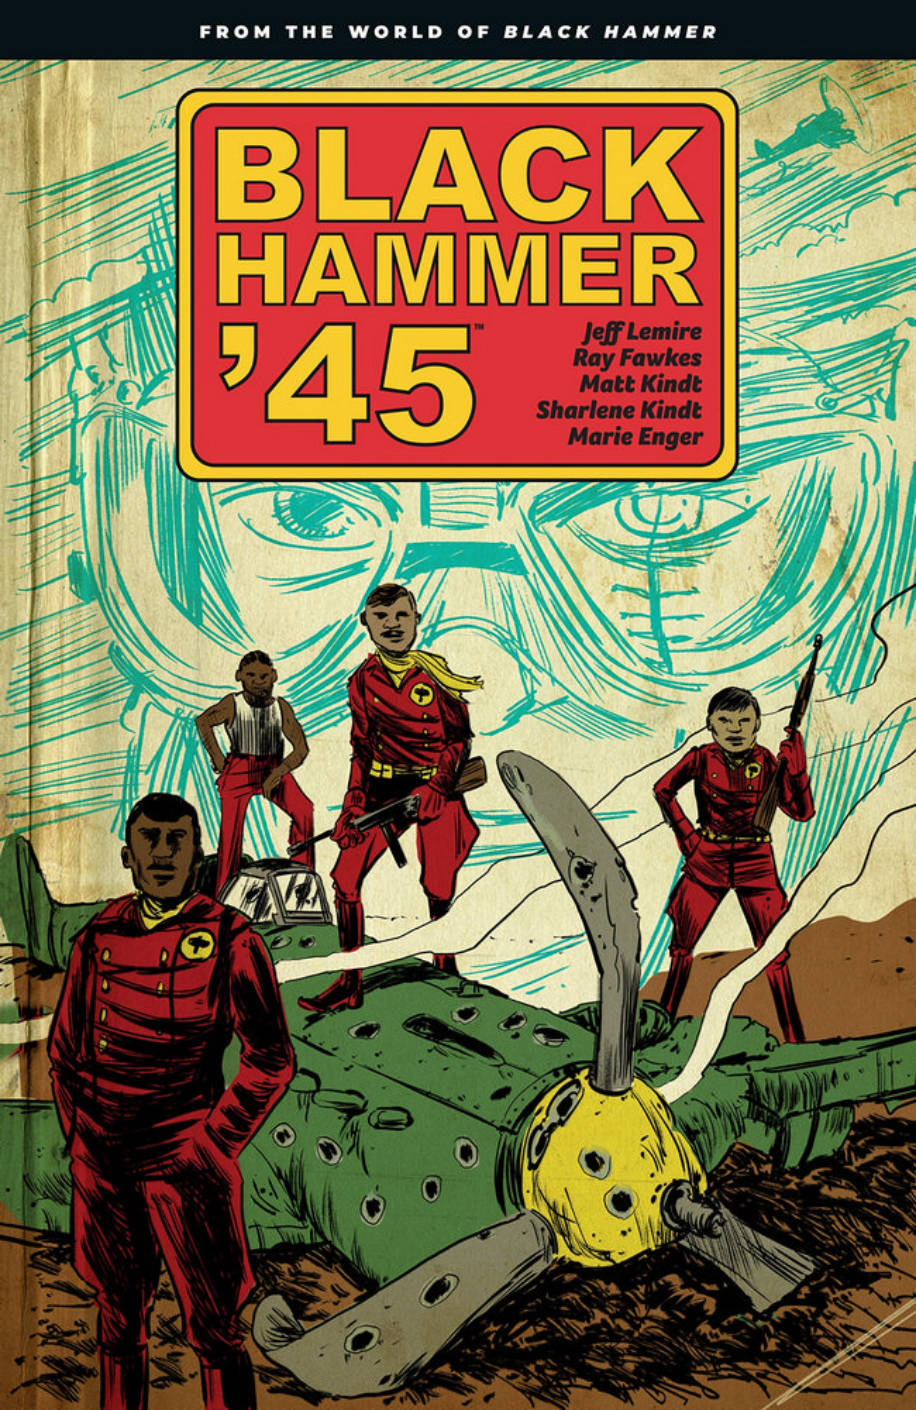 Black Hammer ’’45: From the World of Black Hammer